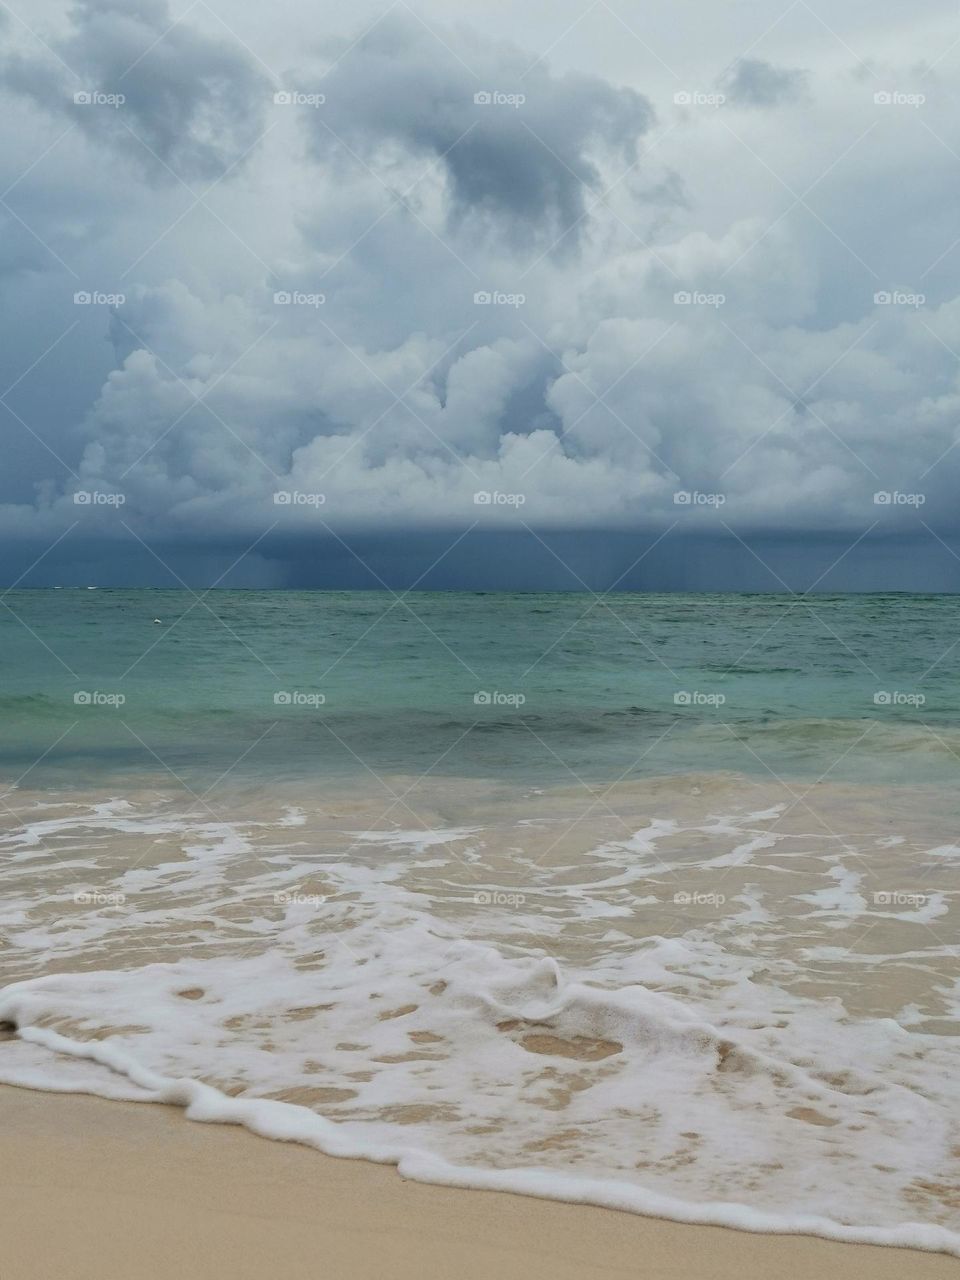 Sea. Seashore. Cloudy weather. Waves. Rain. Seascape.